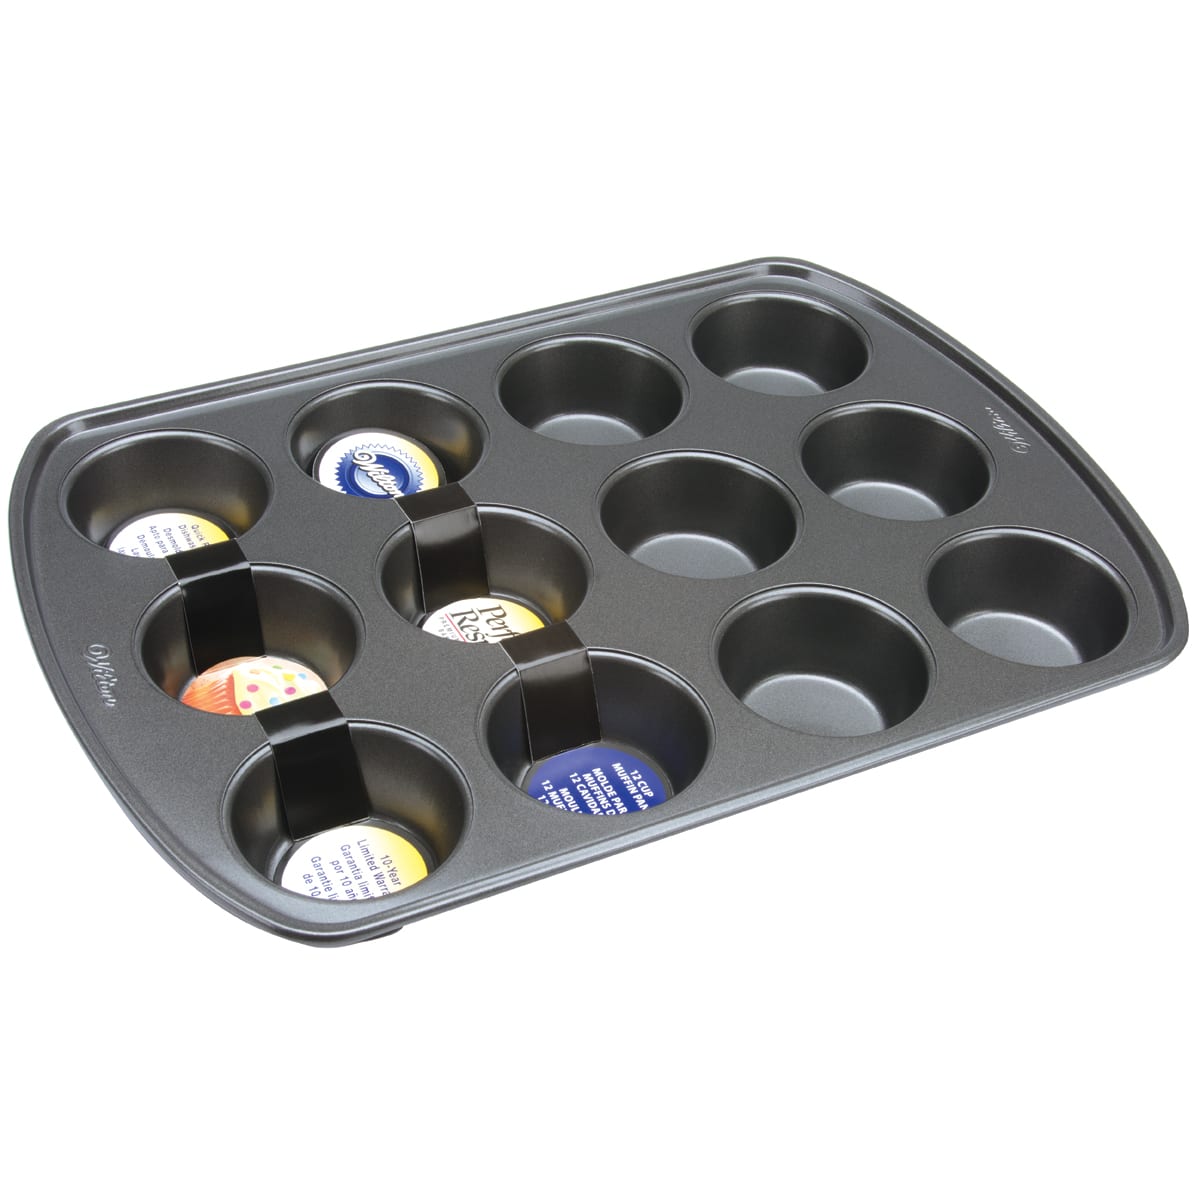 Muffin Top Pan Perfect Results Premium Non-Stick Bakeware, 12-Cup - Wilton